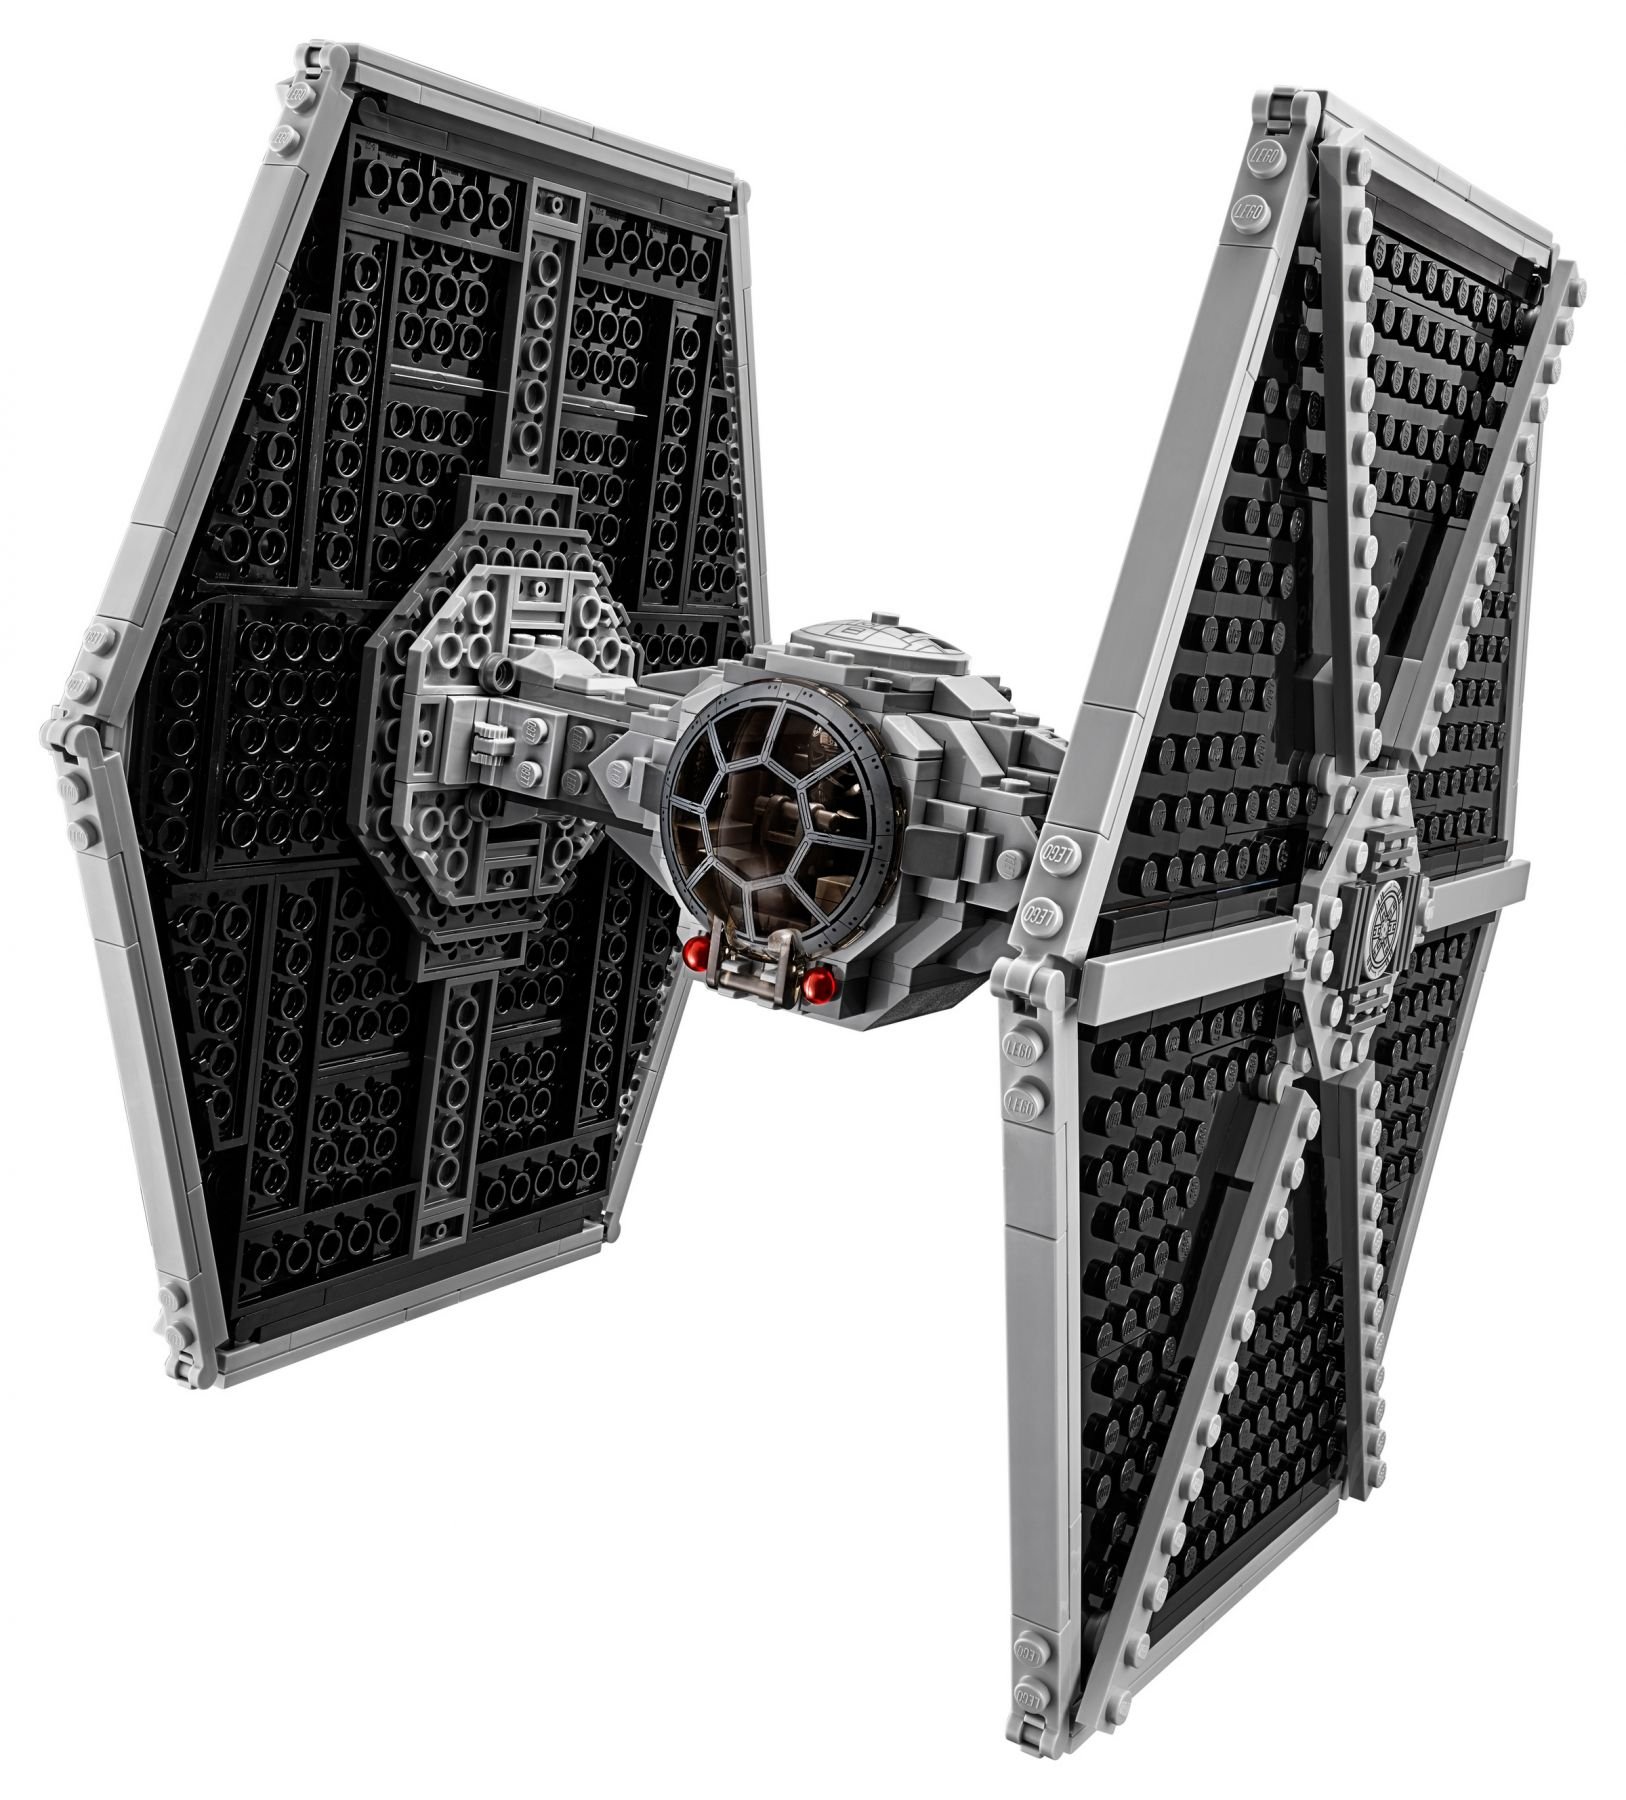 LEGO Star Wars 75211 Imperial TIE Fighter™ LEGO_75211_alt2.jpg